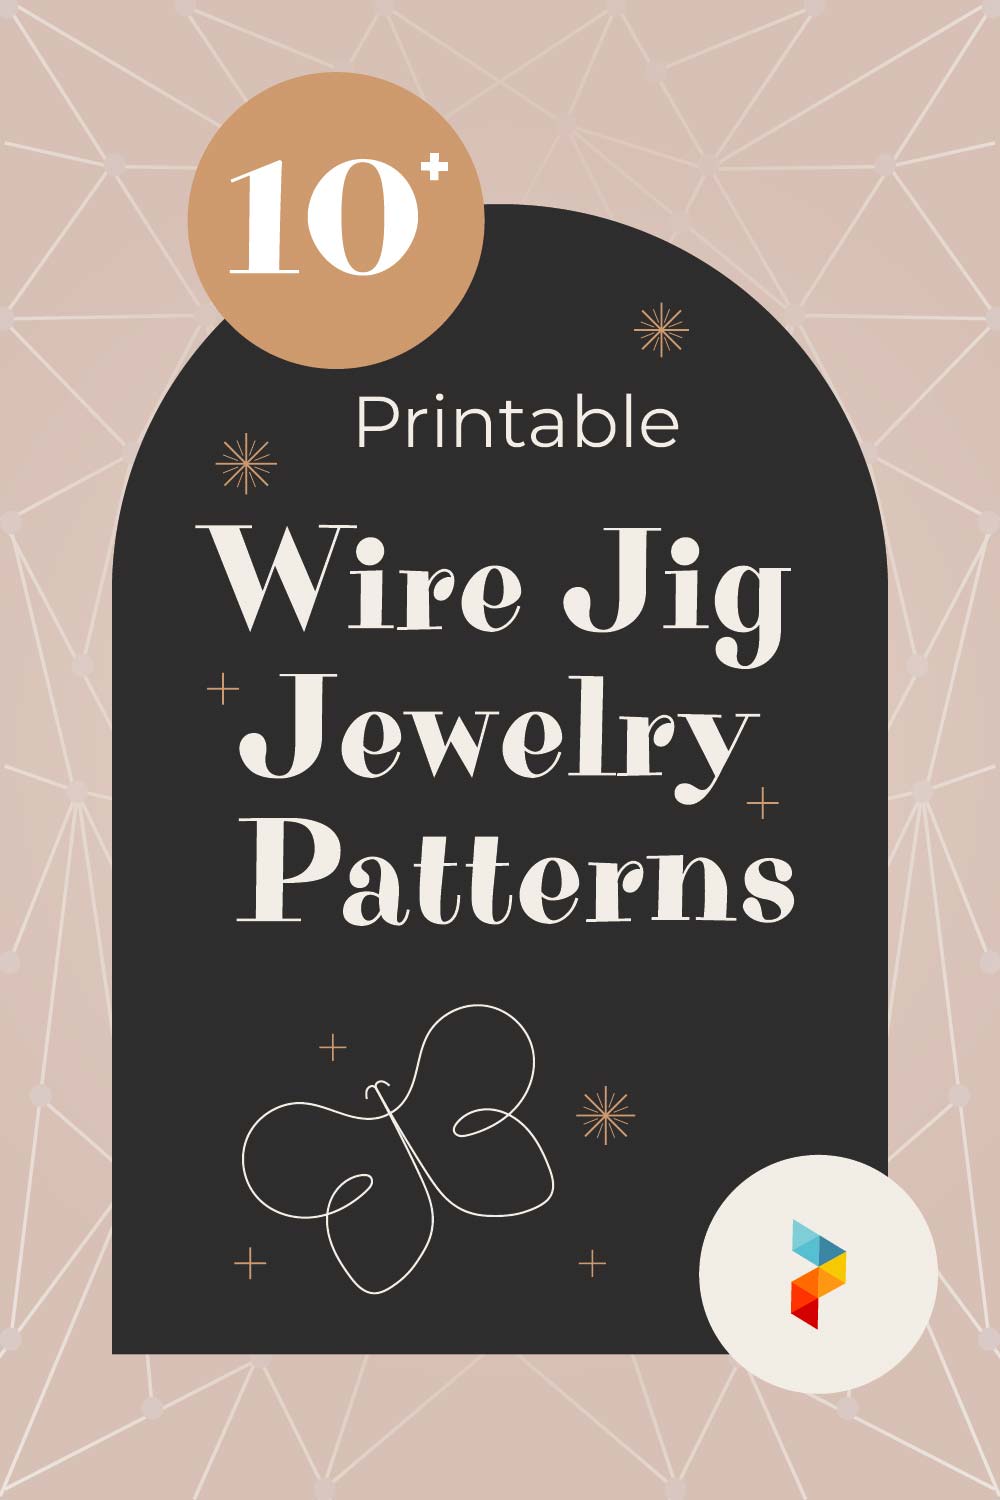 Wire Jig Jewelry Patterns